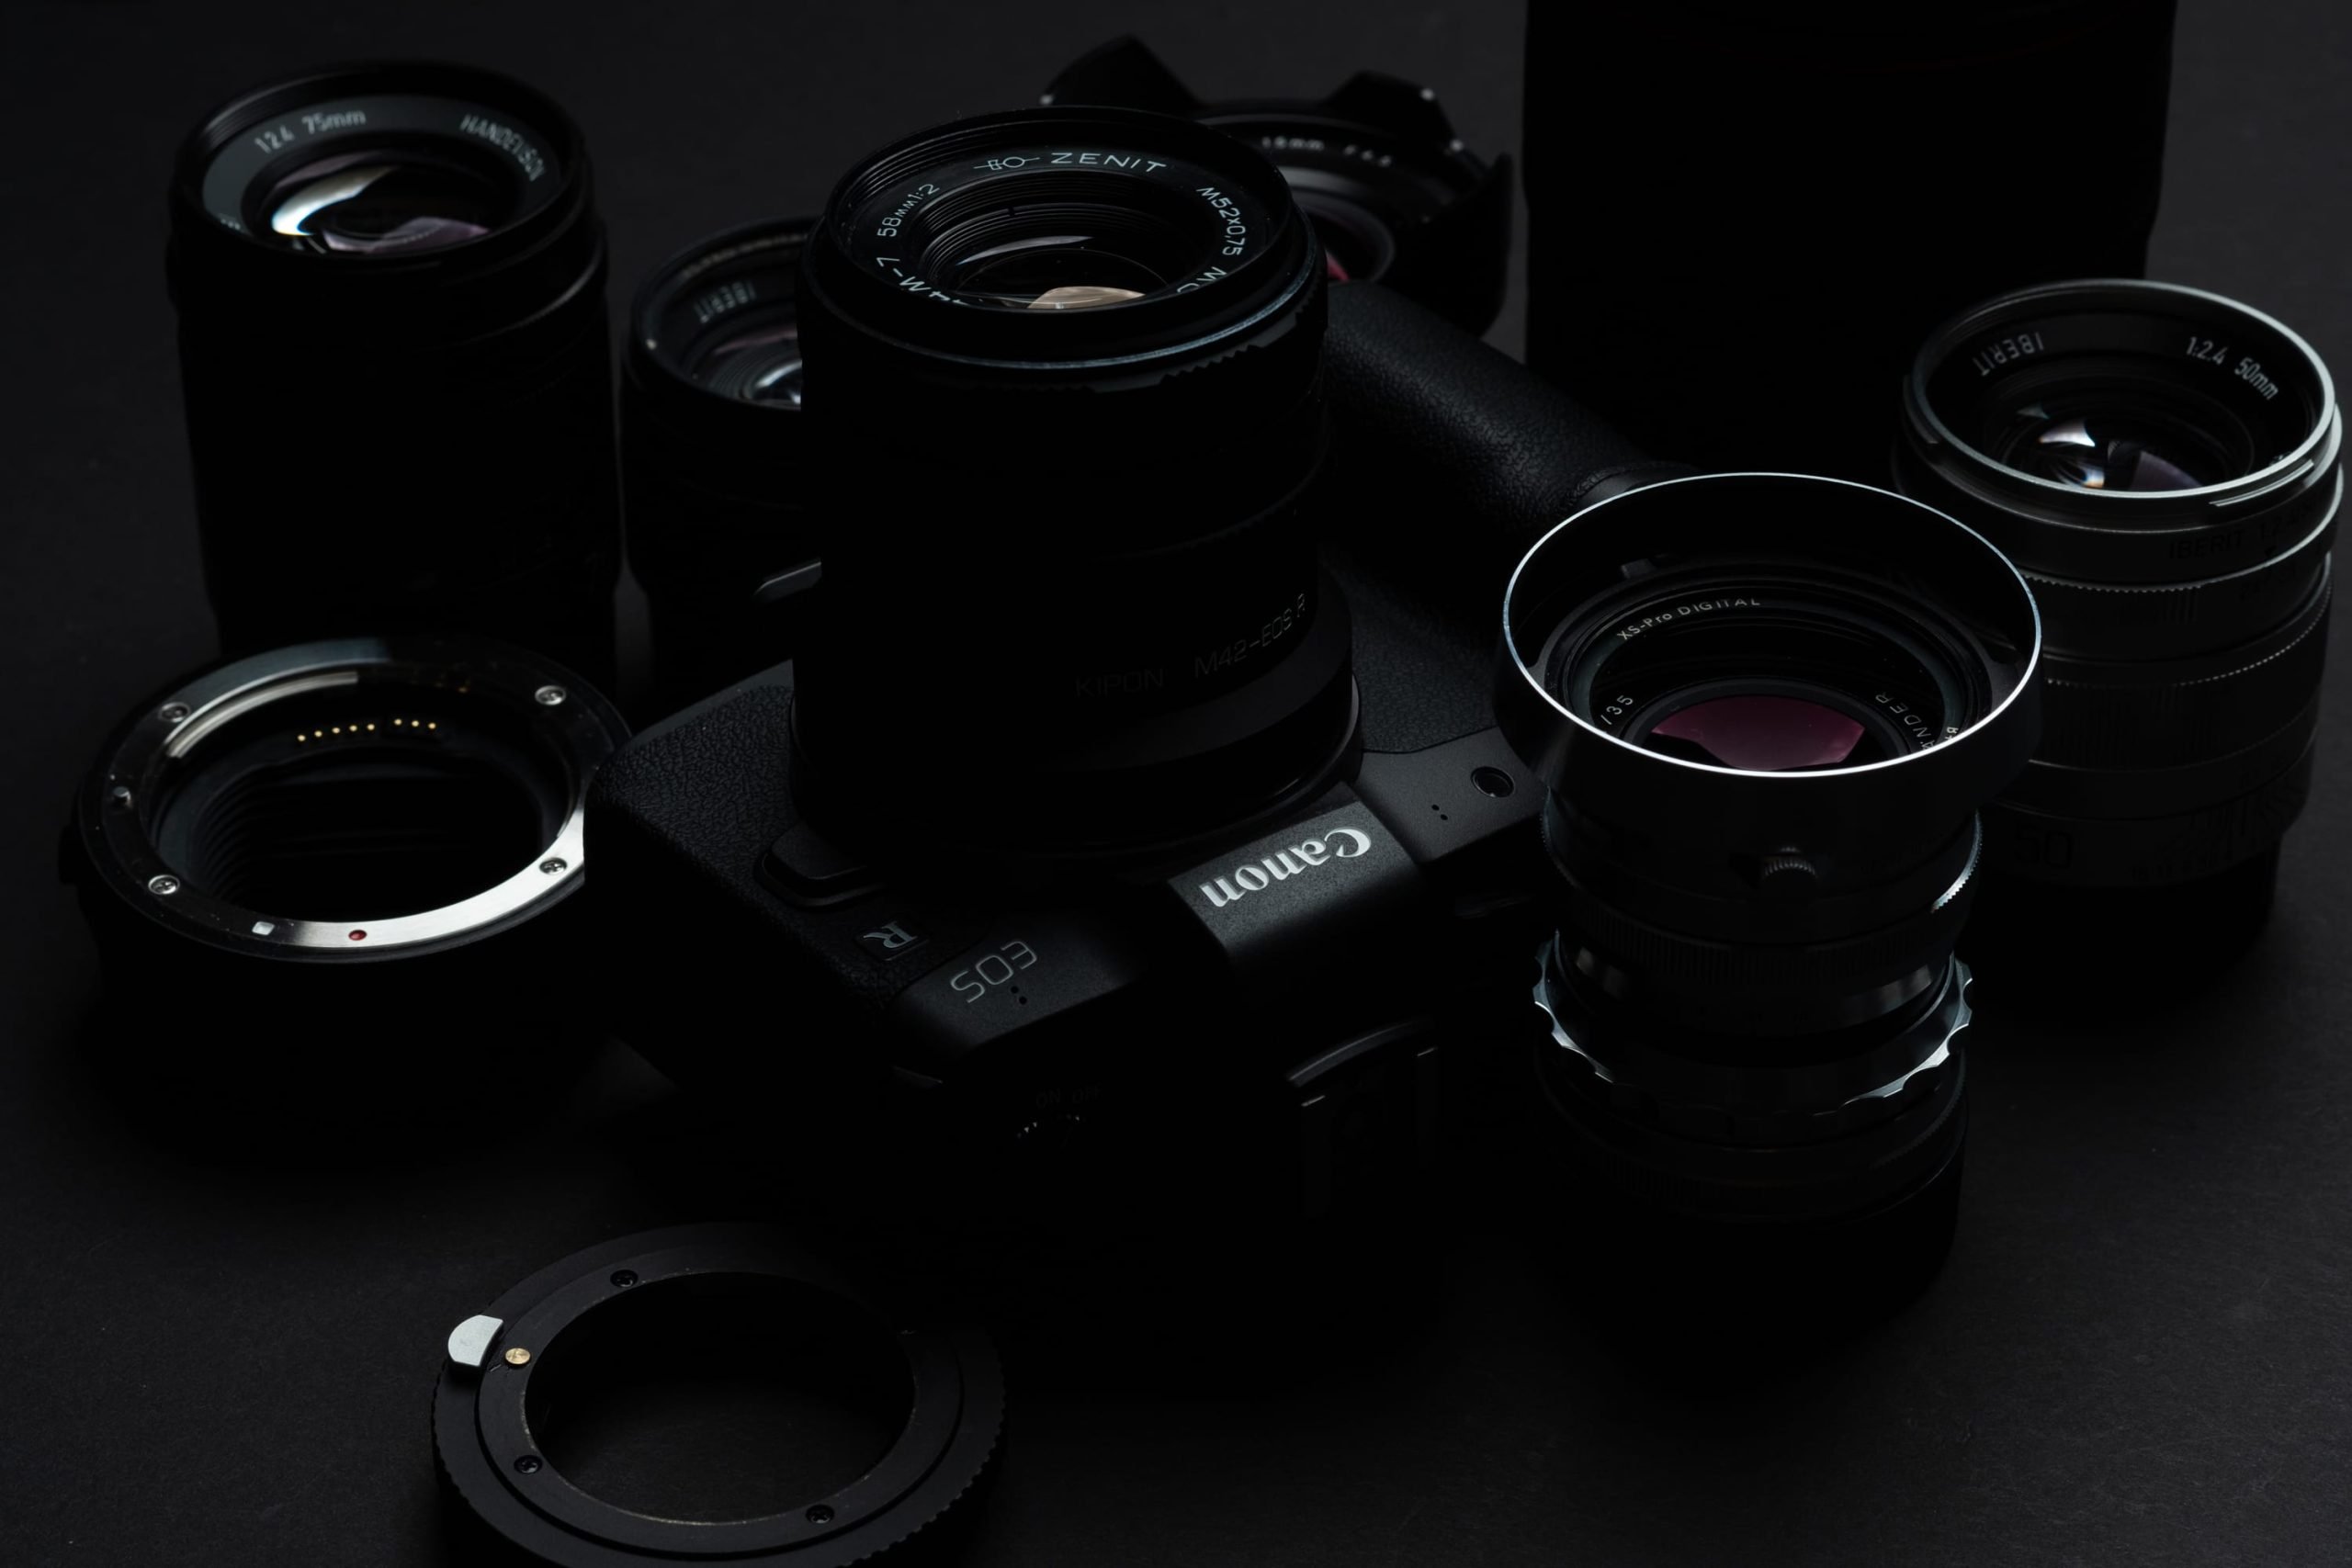 Product List - EOS R Camera - Canon HongKong